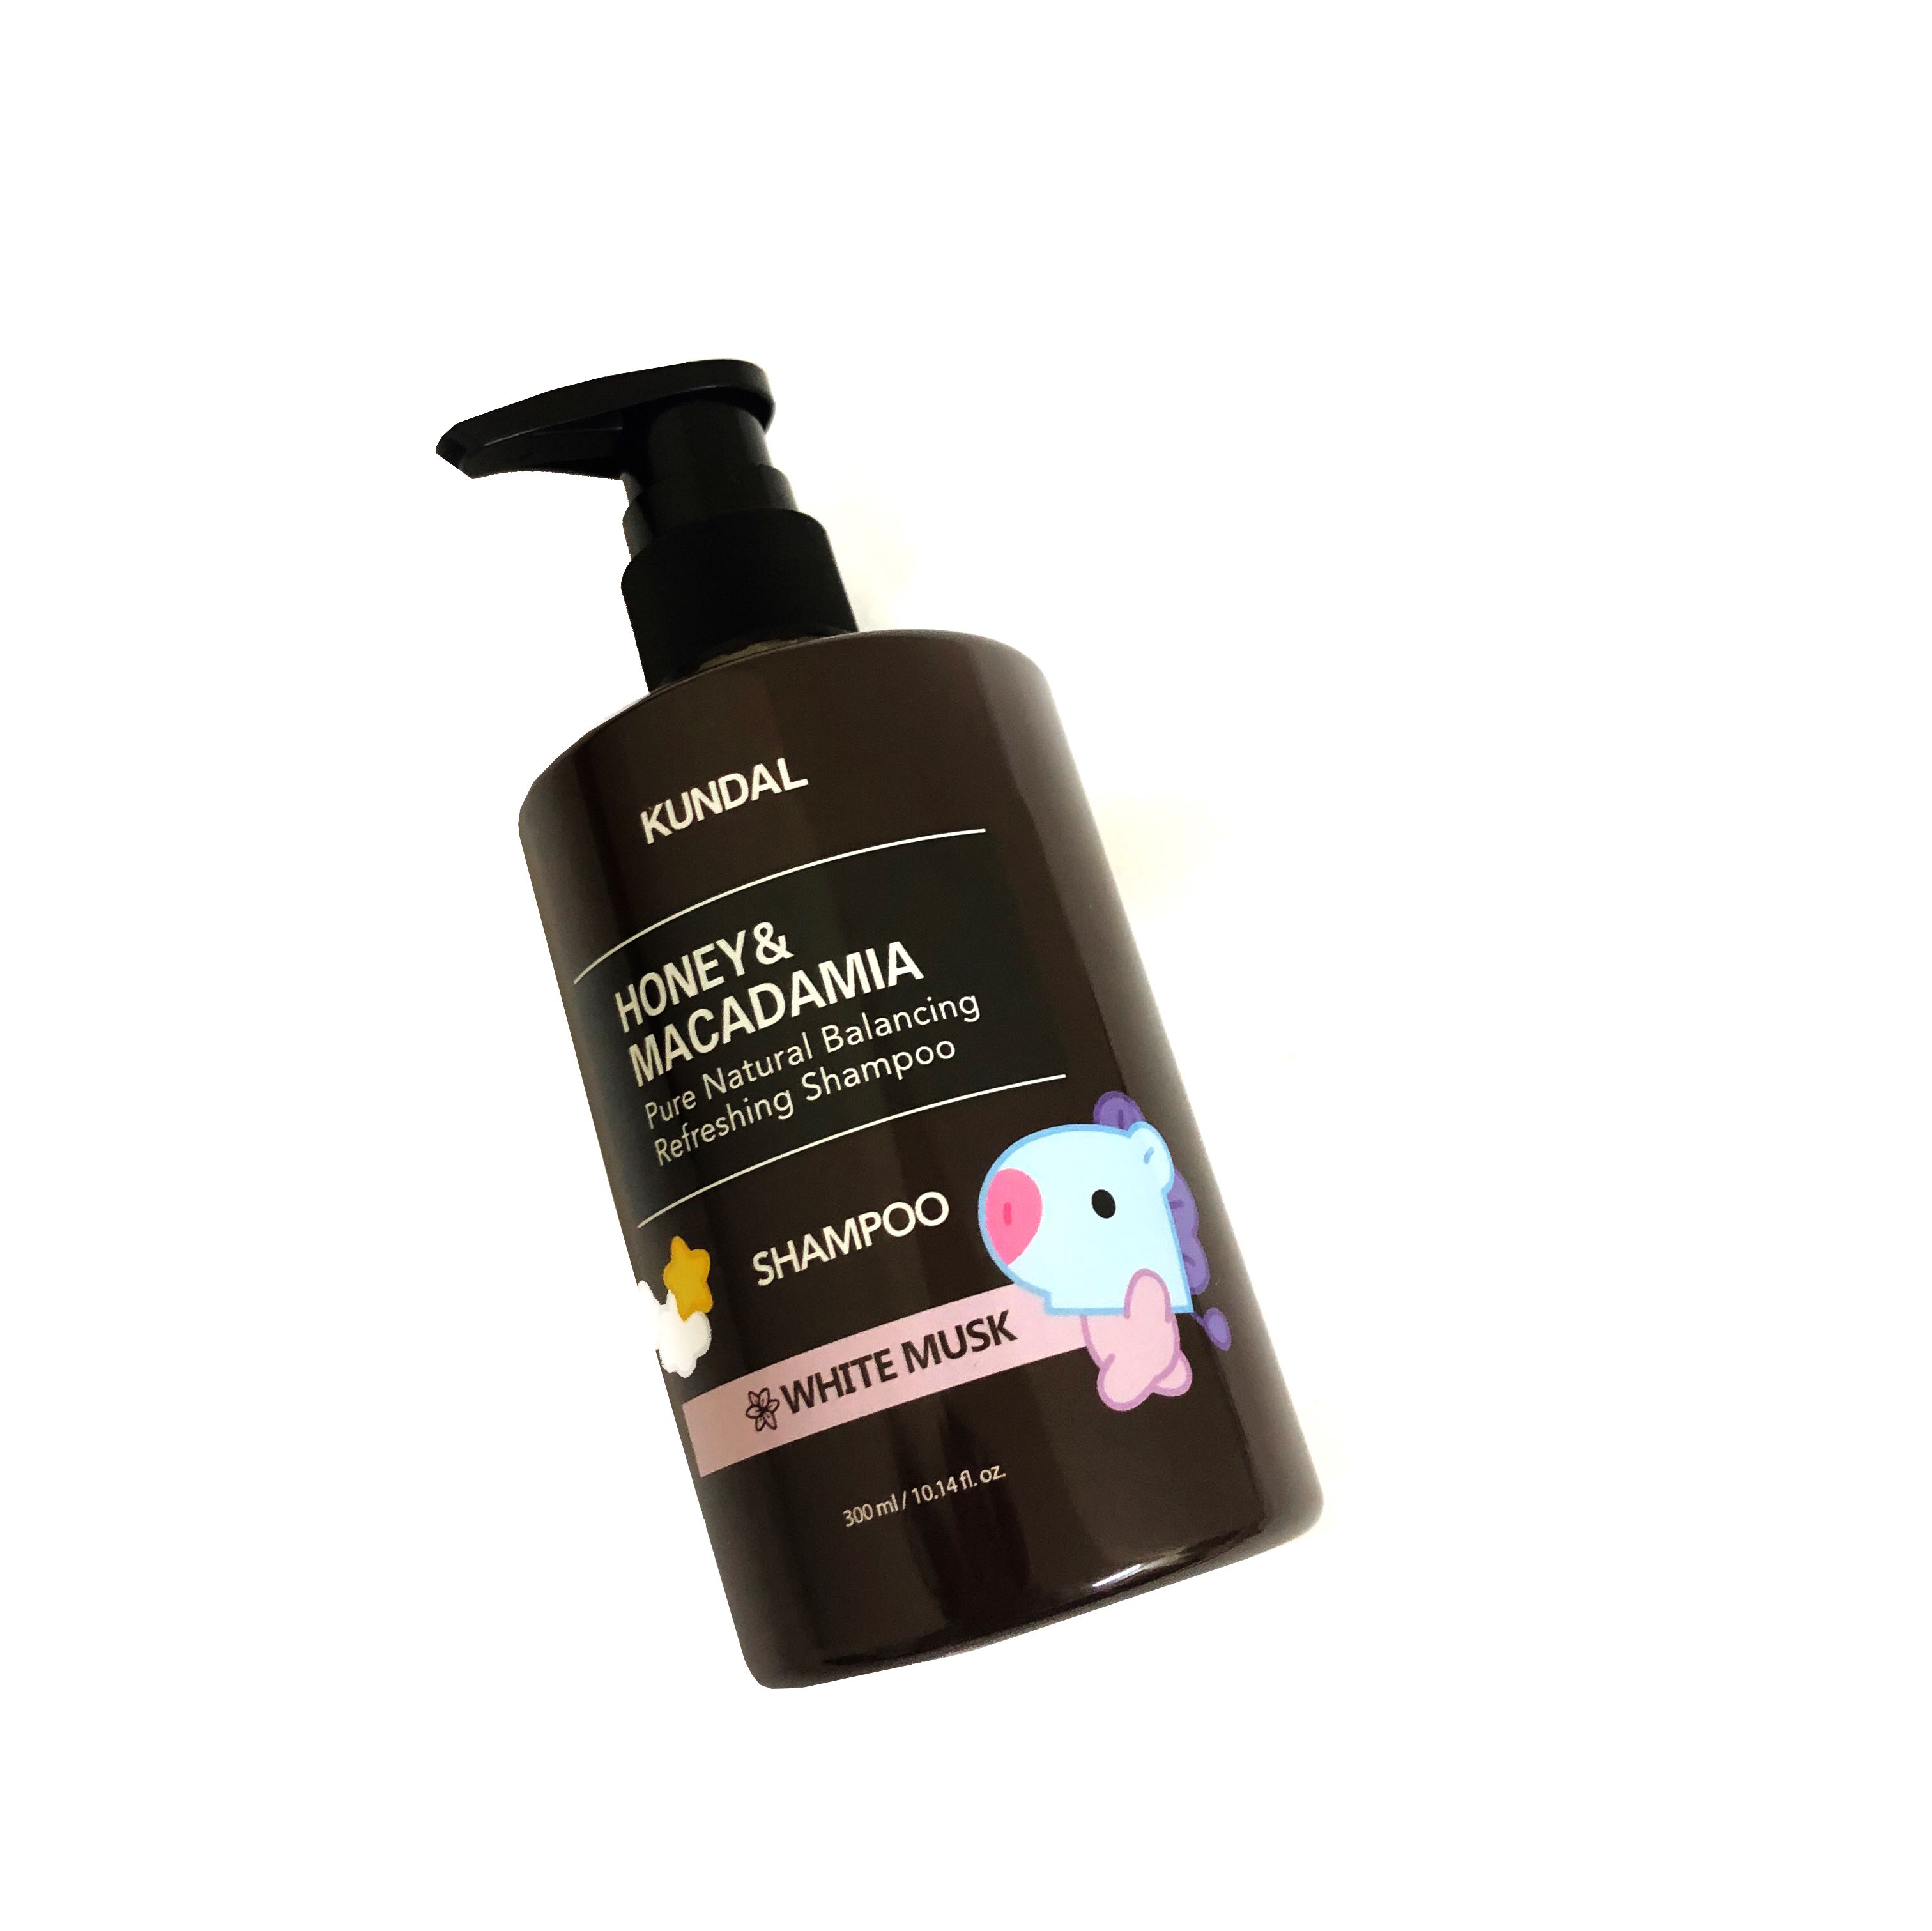 Bt21 kundal shampoo Review Kundal